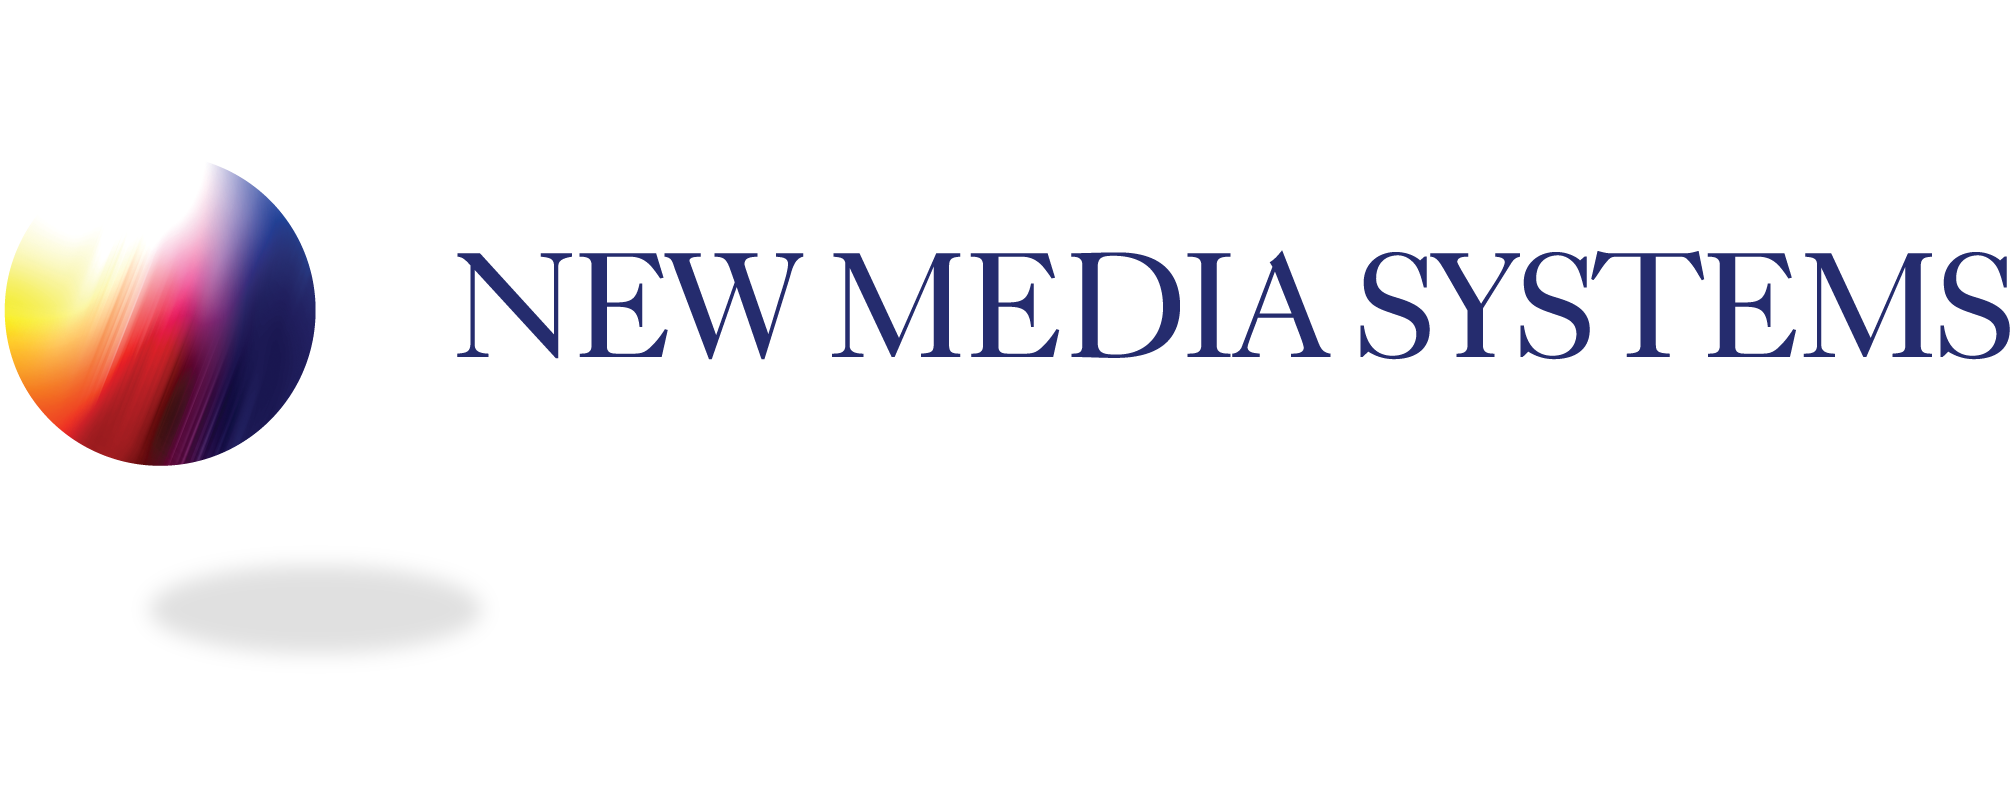 New Media Systems